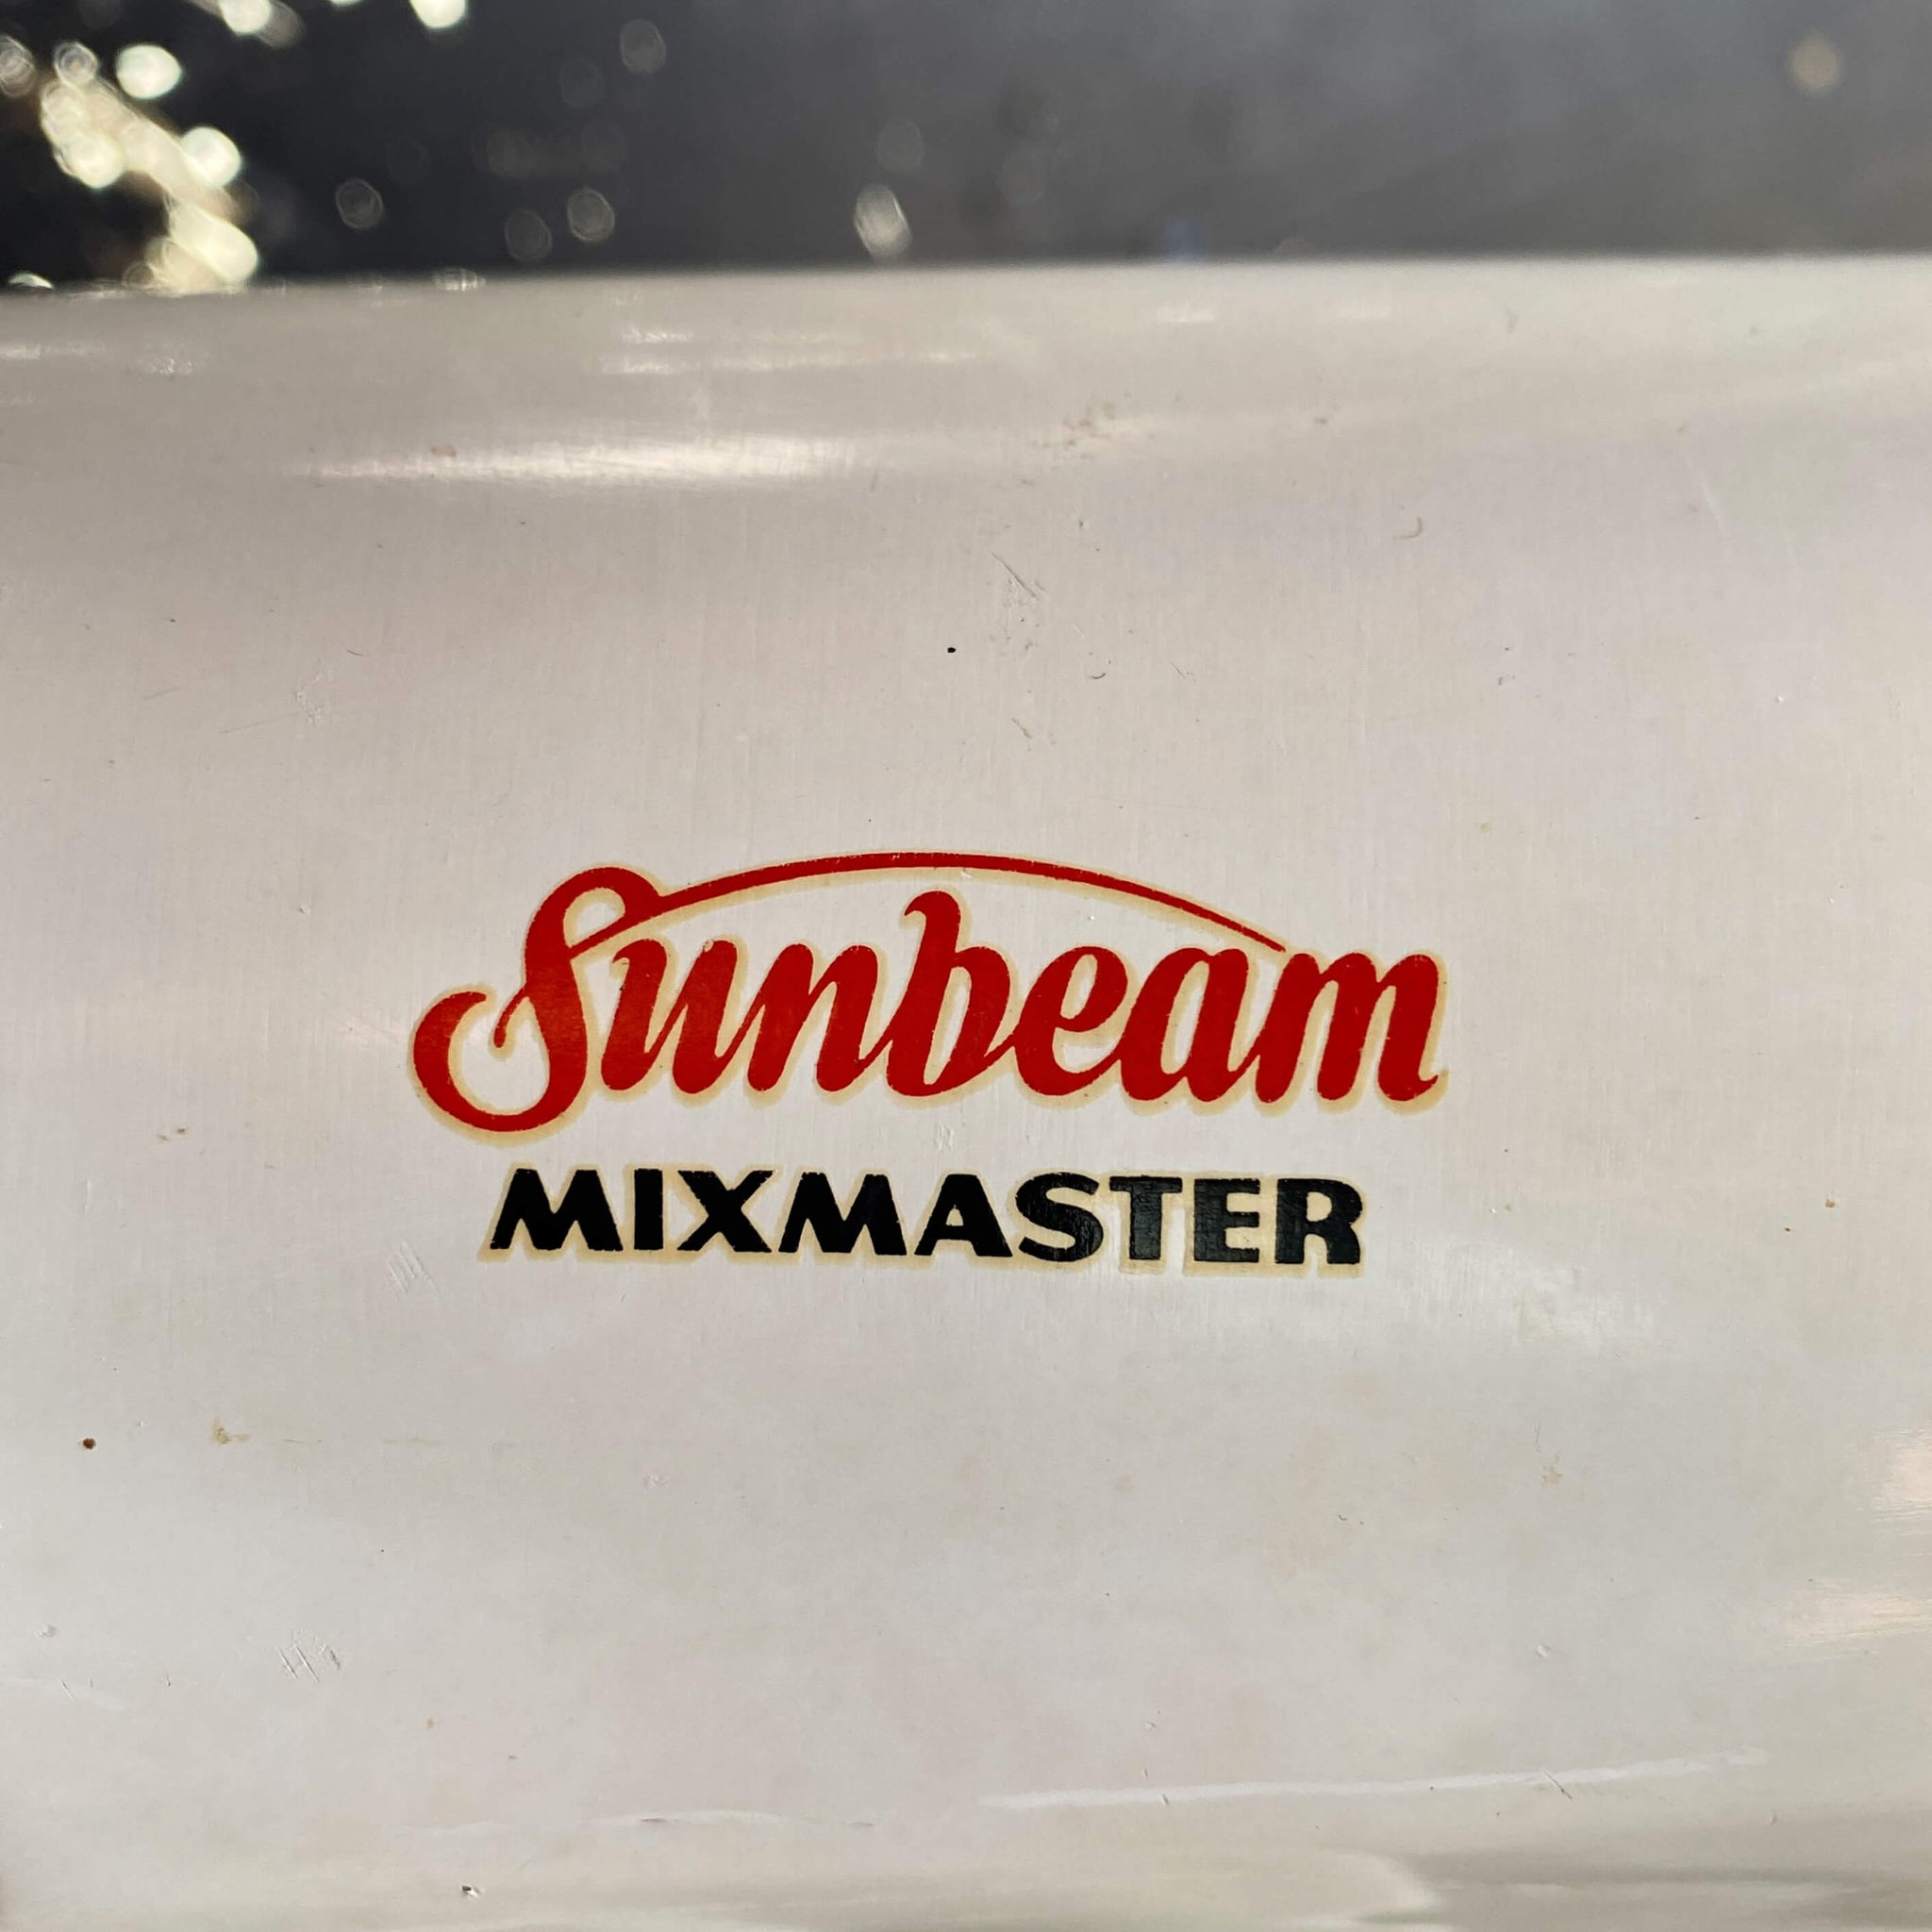 Vintage Mixer Bowl Set Fire King for Sunbeam Clear Glass Pour Spout 6 & 9  Inch Mixing -  Log Cabin Decor